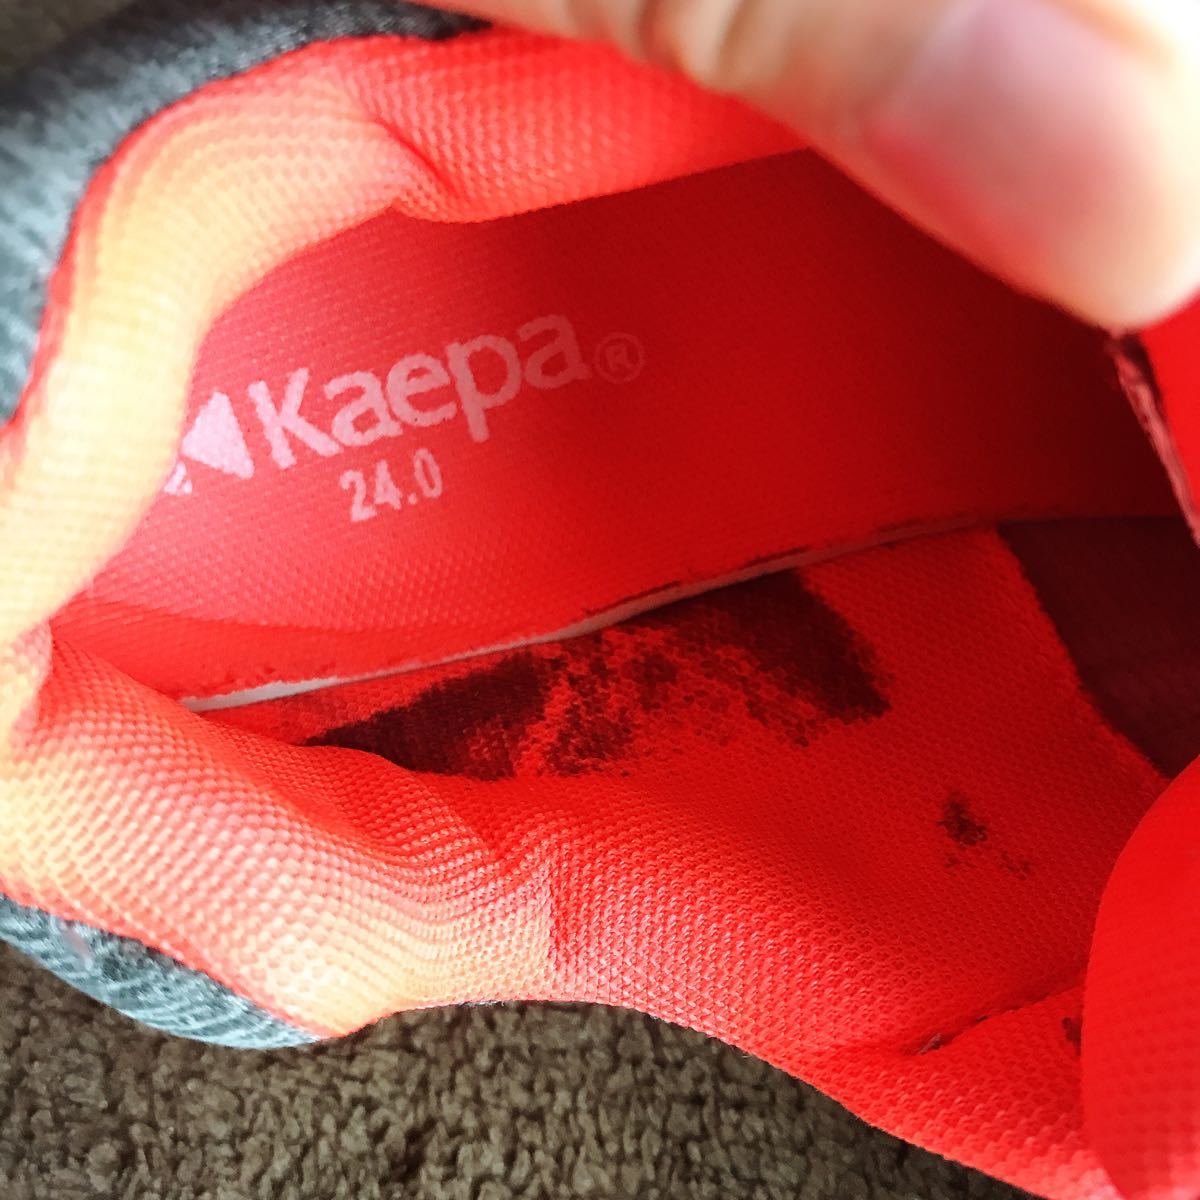 Kaepa スニーカー グレー オレンジ 24.0cm 美品 ケイパ